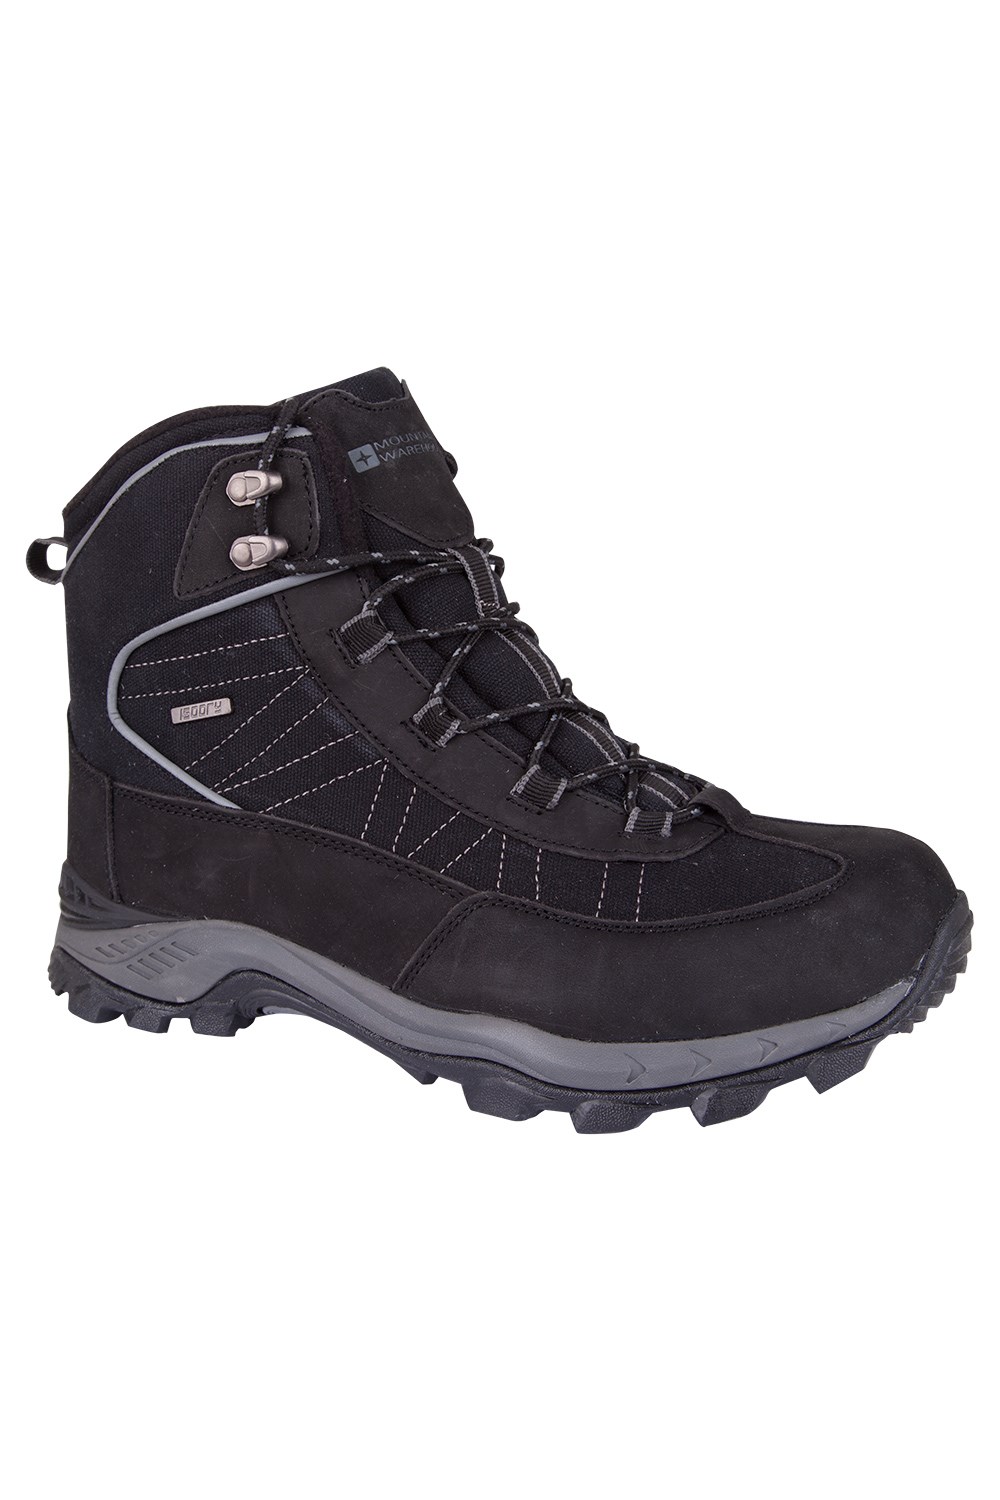 mountain warehouse mens walking boots